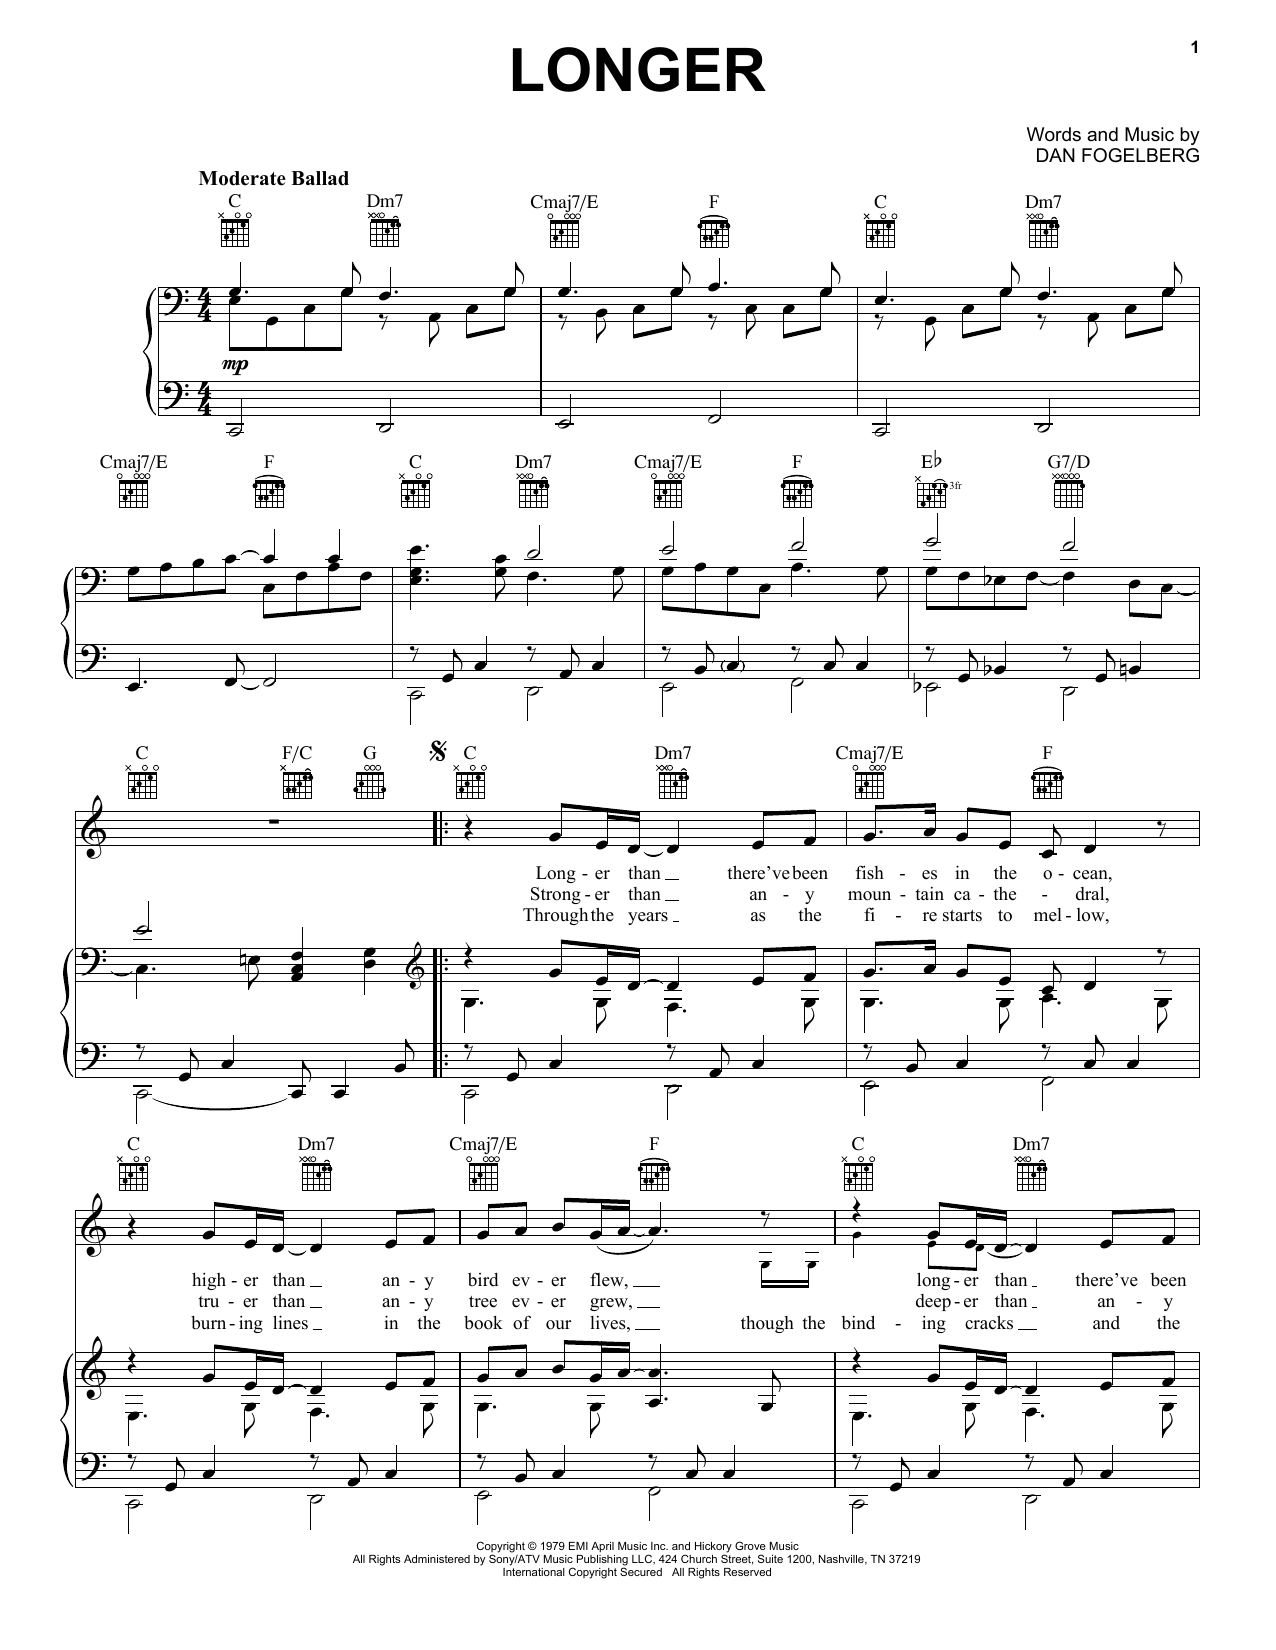 Dan Fogelberg Longer Sheet Music Notes & Chords for Lyrics & Chords - Download or Print PDF